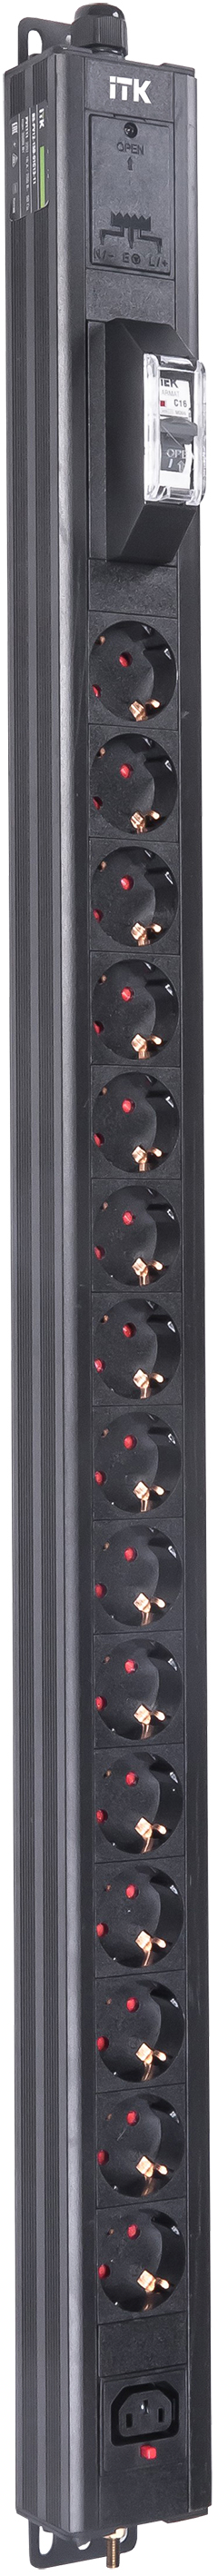 ITK BASE PDU вертикальный PV1111 22U 1 фаза 16А 15 розеток SCHUKO (немецкий стандарт) + 1 розетка C13 кабель 2,6м вилка SCHUKO (немецкий стандарт)